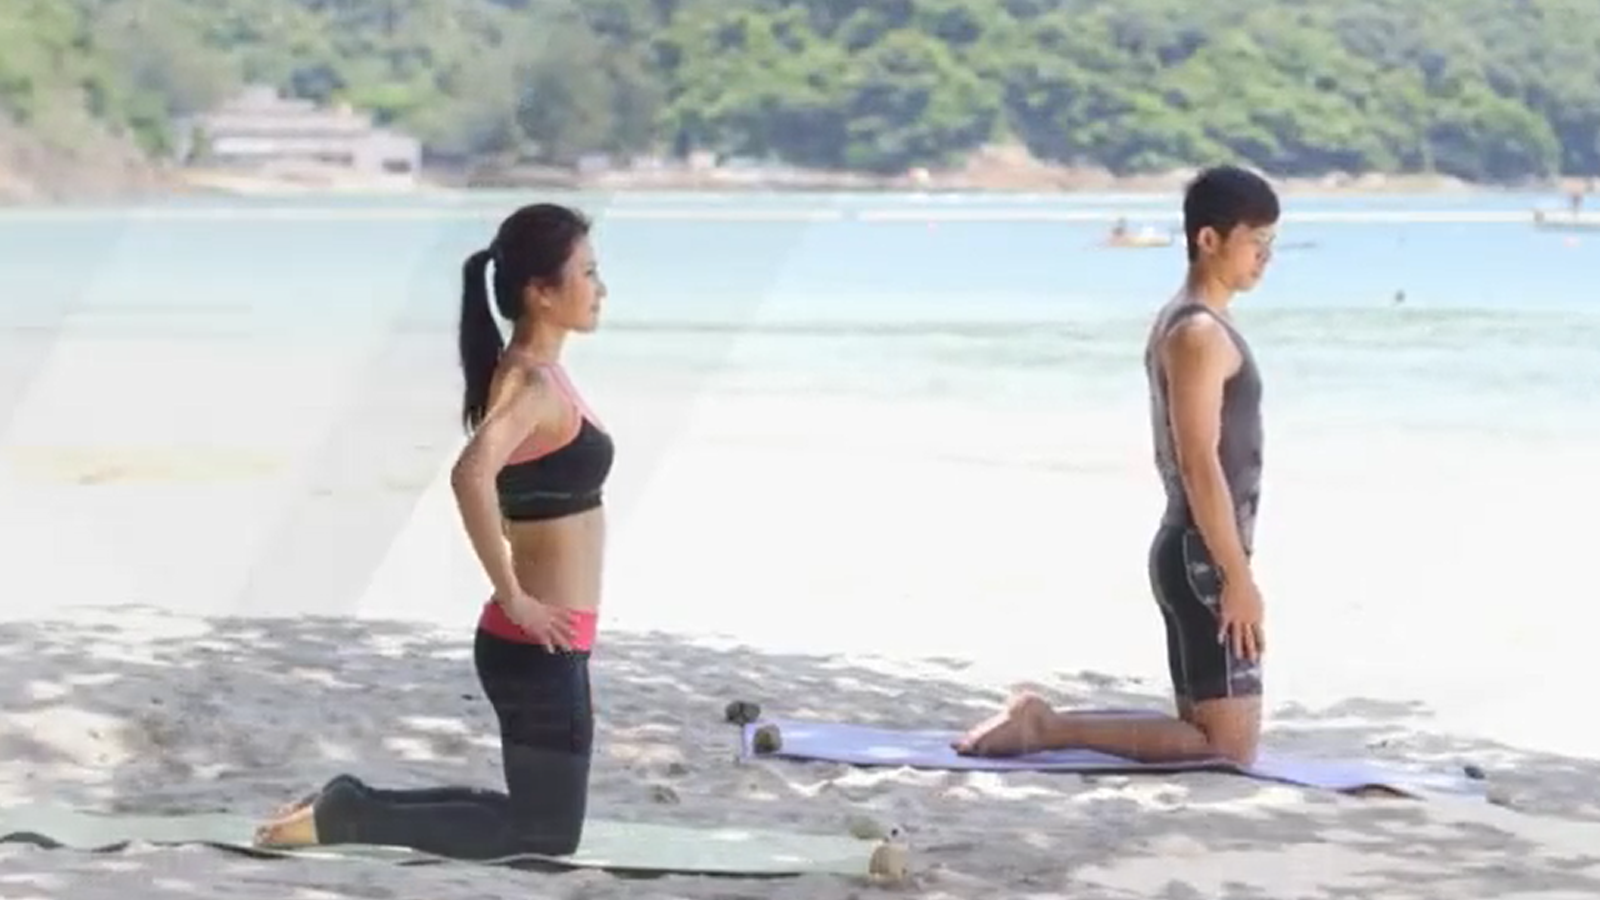 Yoga Teaching Video Dry Goods: Men and Women Yoga Beach Chapter